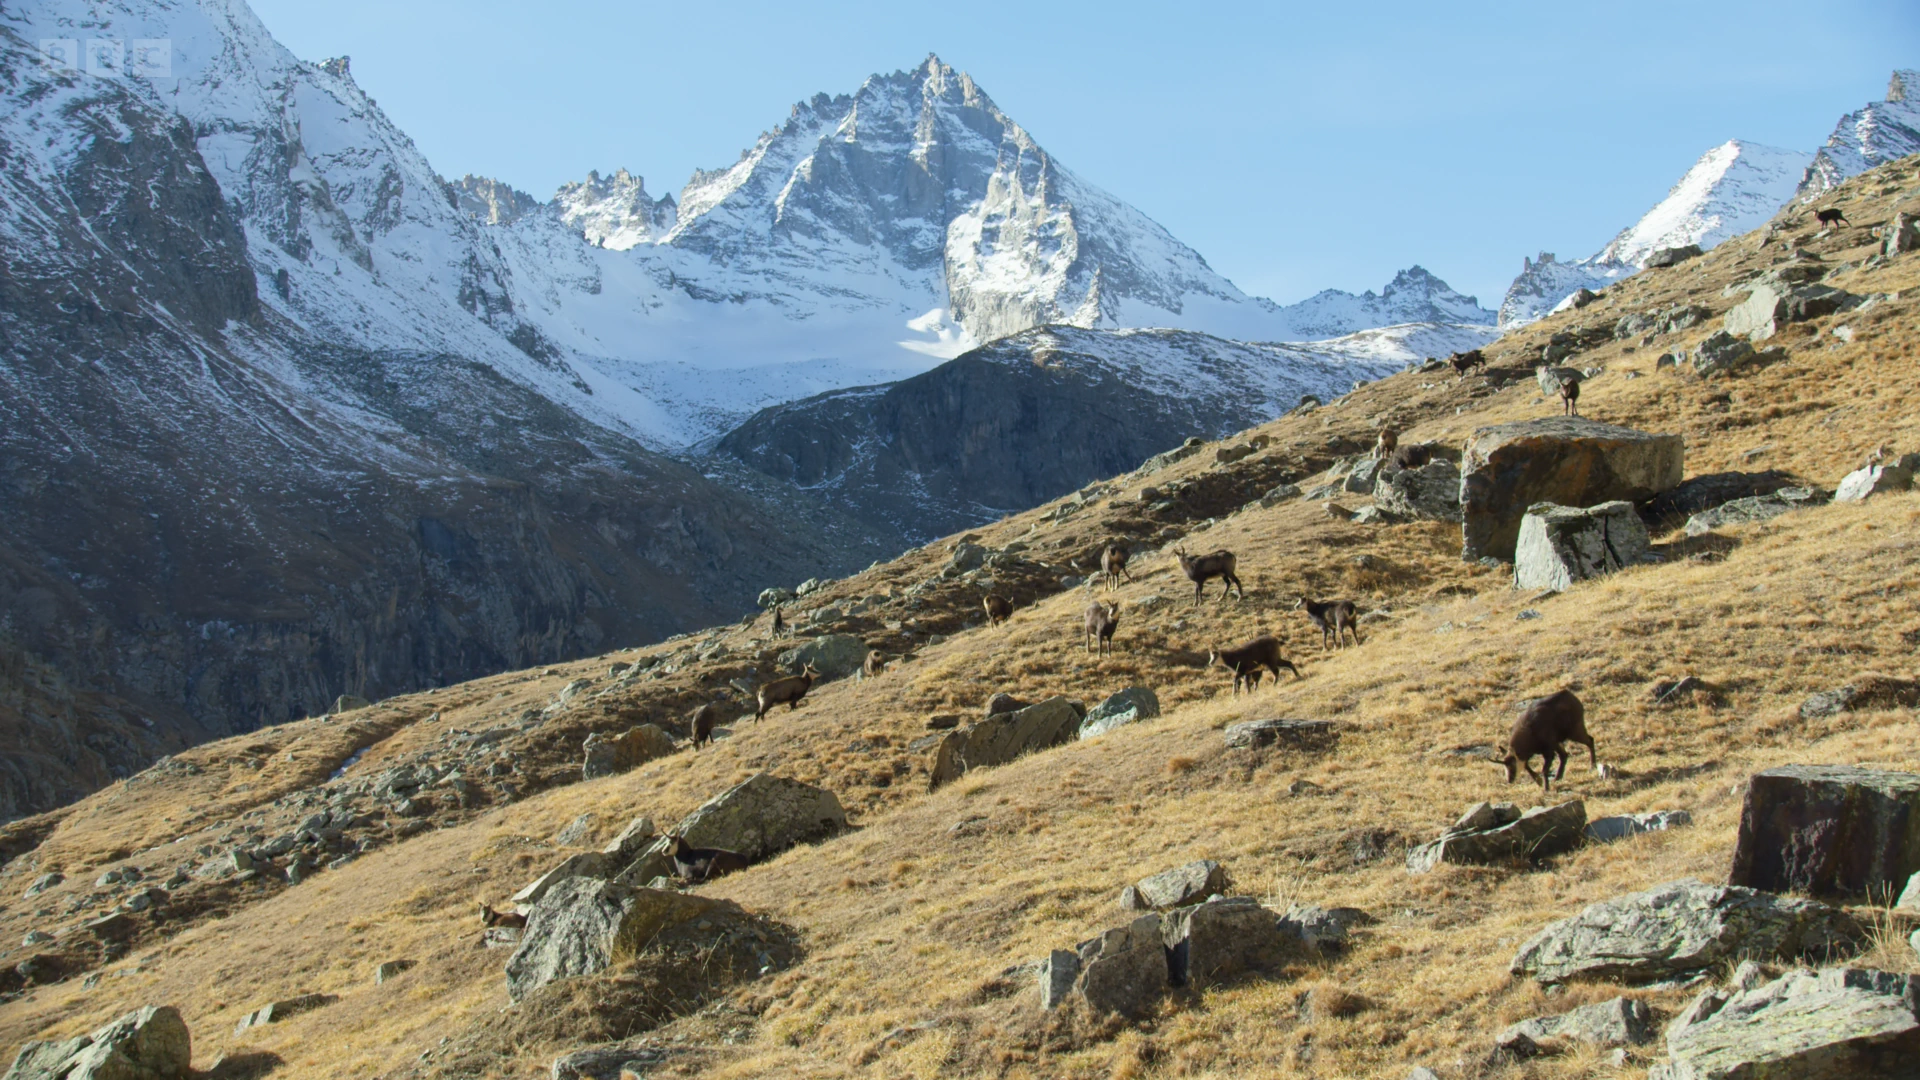 Alpine chamois (Rupicapra rupicapra rupicapra) as shown in Frozen Planet II - Frozen Peaks